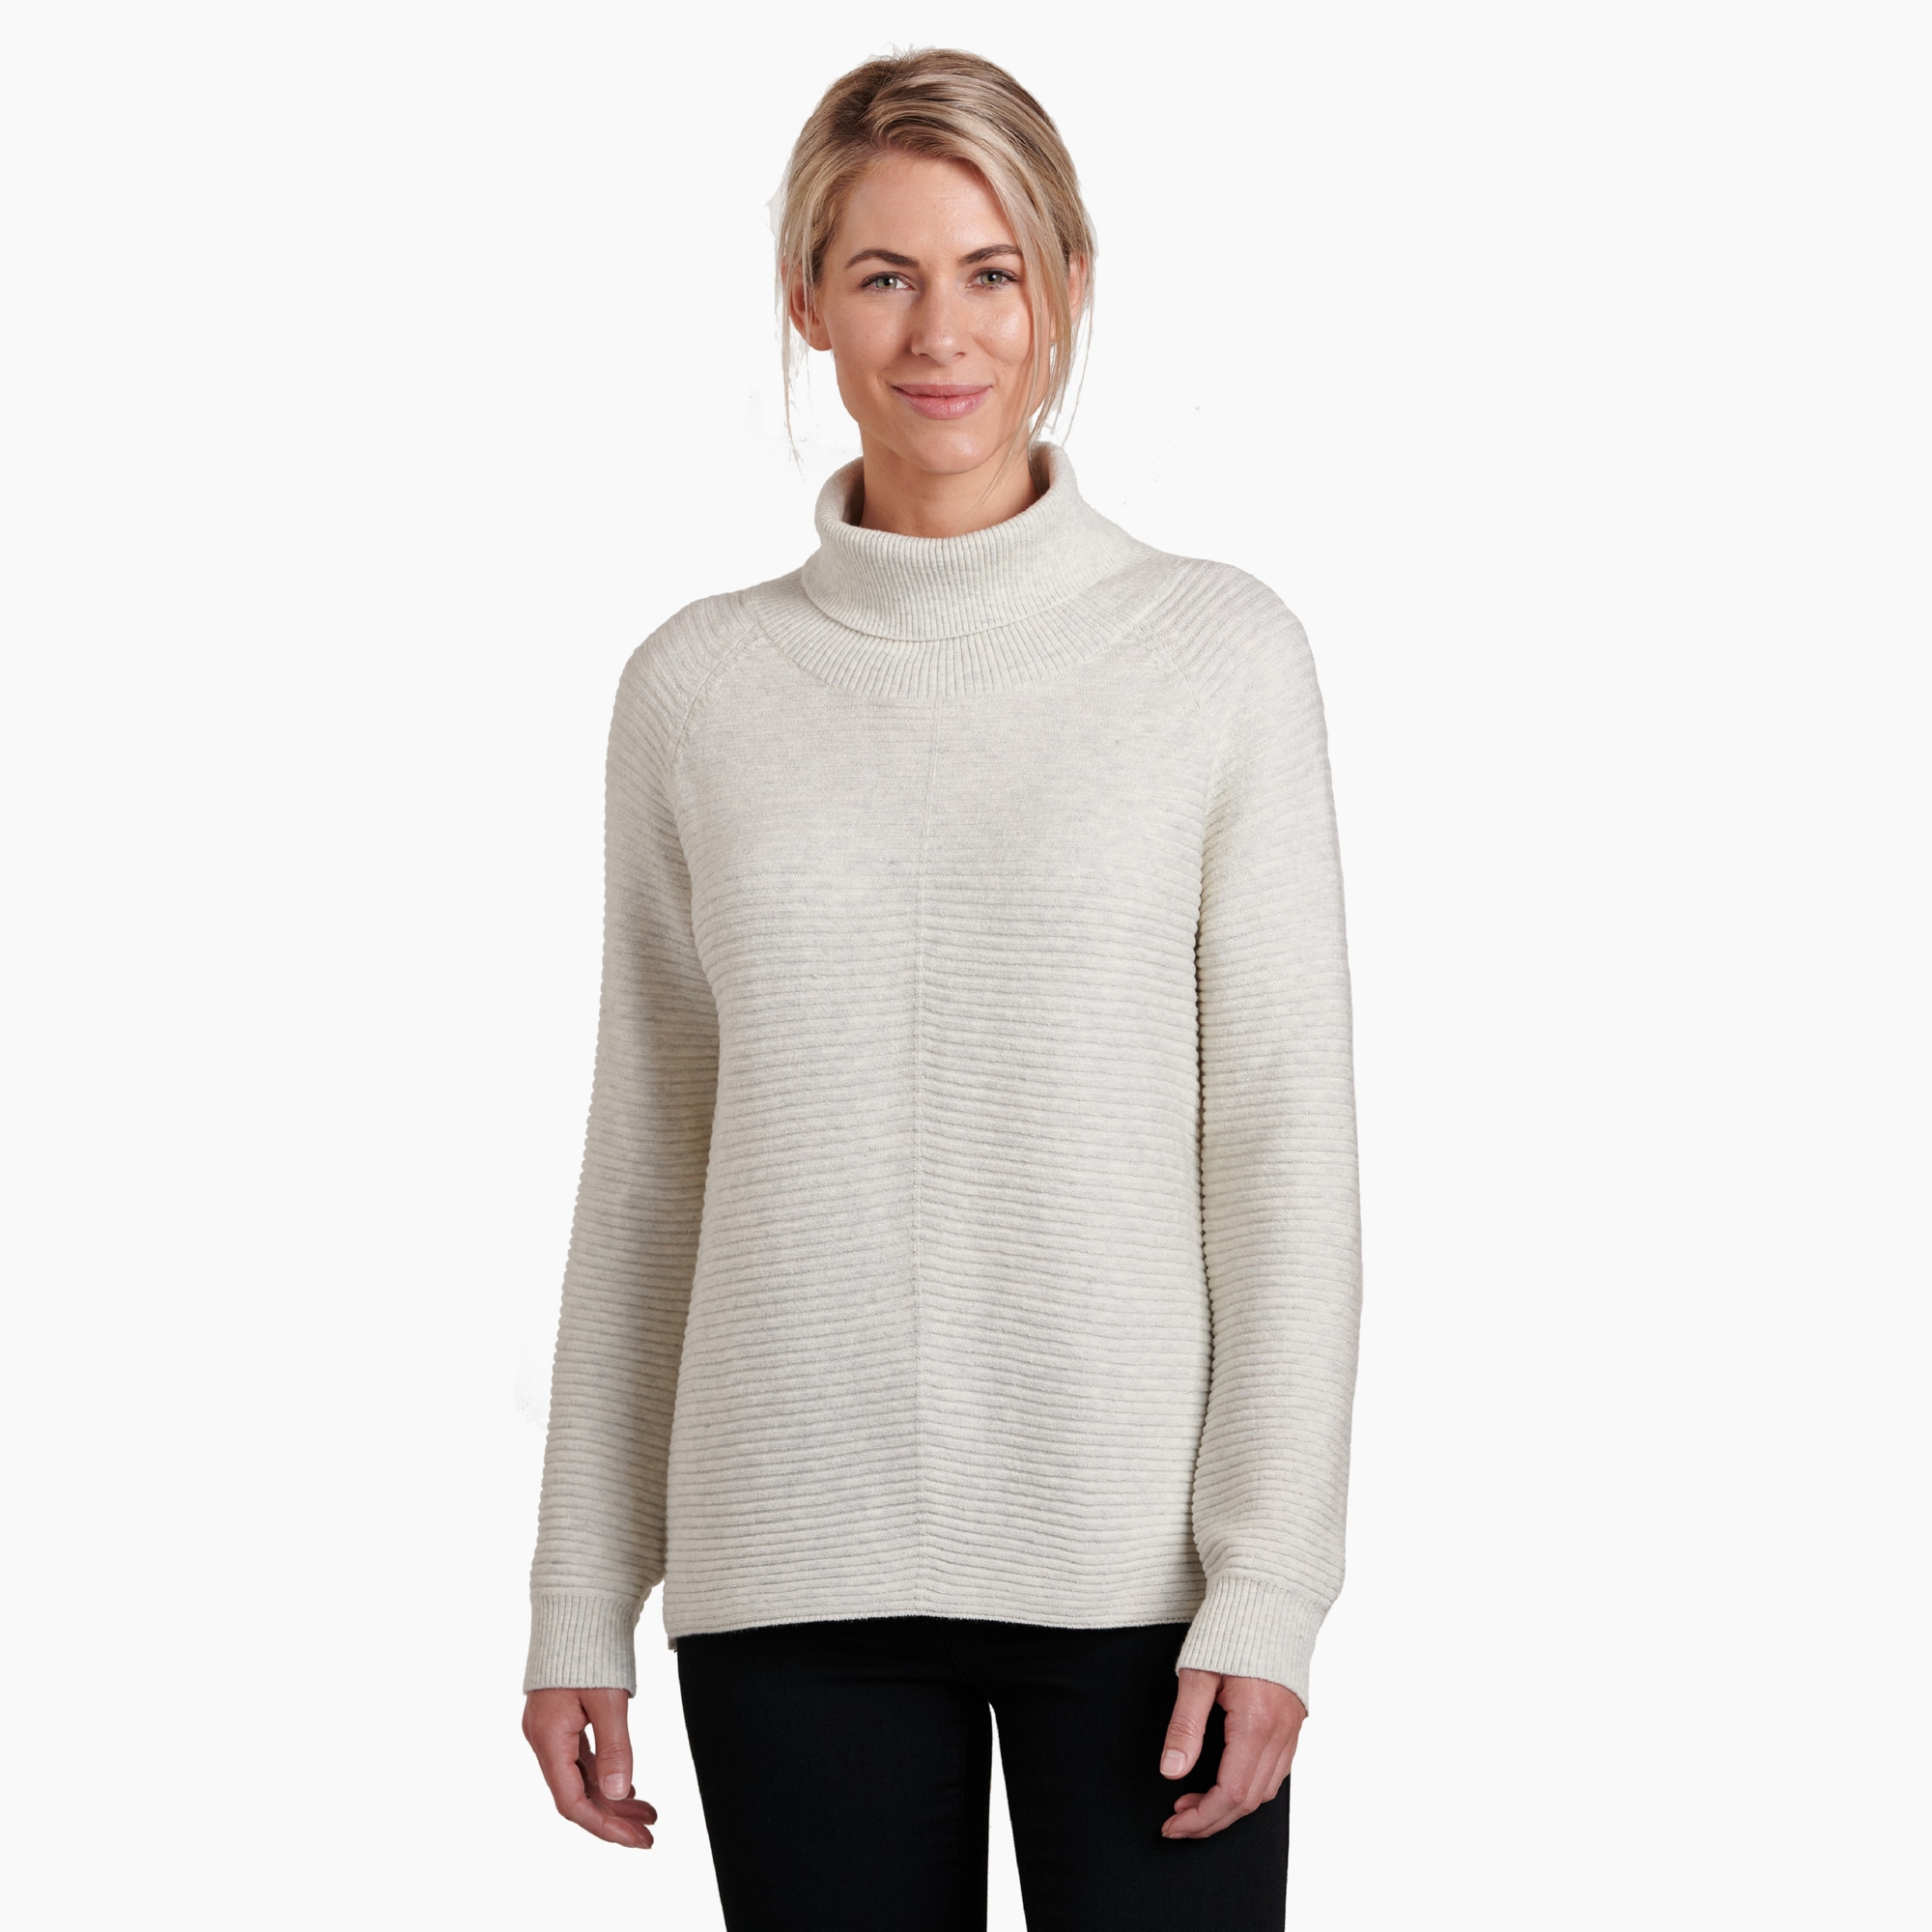 Sweaters & Fleece - Tops - Women | Breathe Outdoors